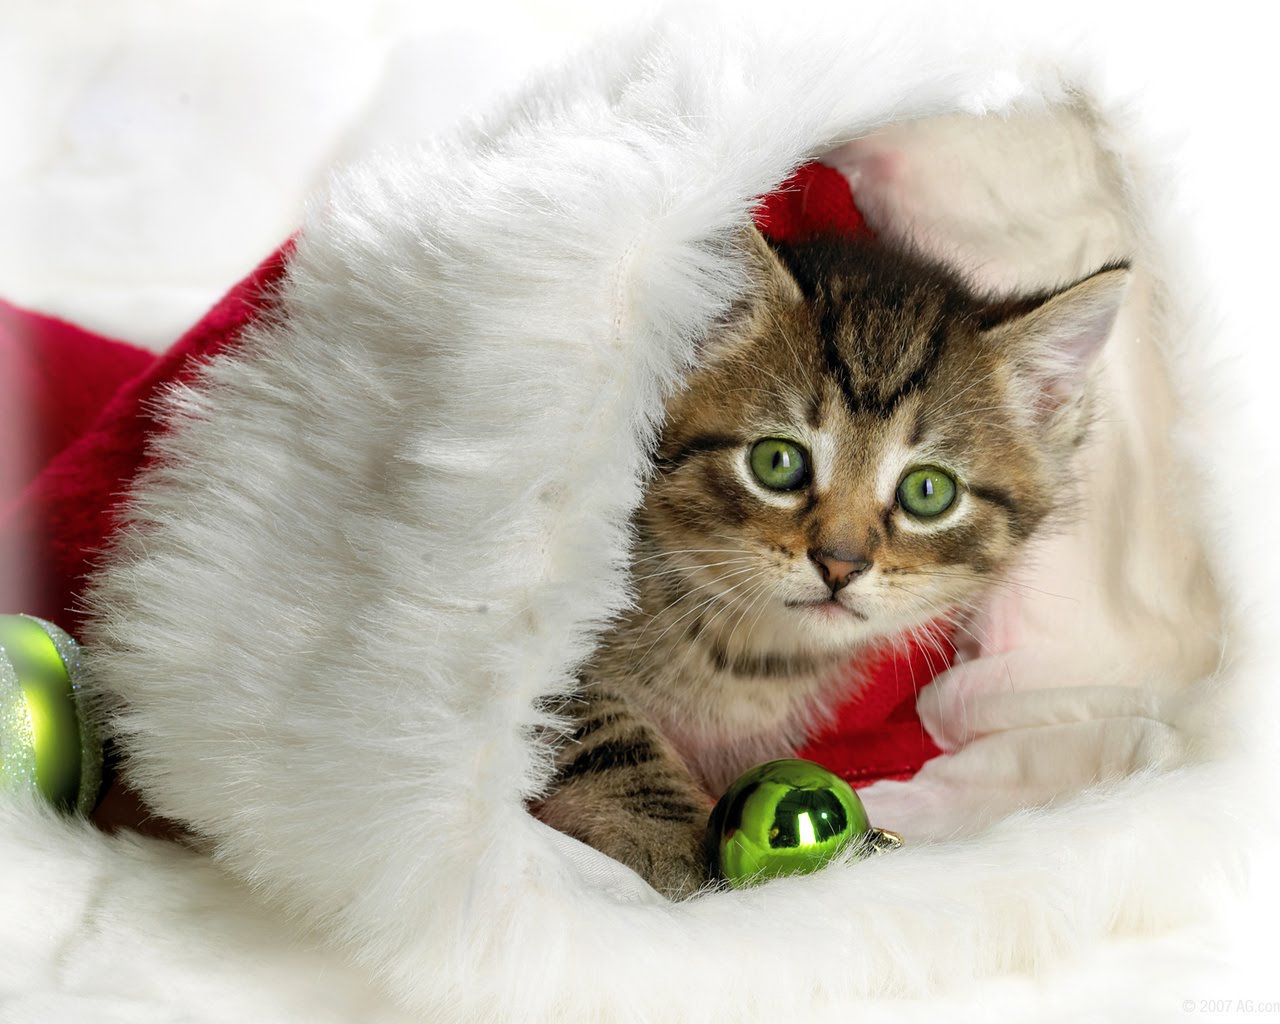 http://2.bp.blogspot.com/_SWYwL3fIkFs/S71VSdIBqxI/AAAAAAAAEFE/wMsHbOXSpBQ/s1600/cat+christmas+hat.jpg